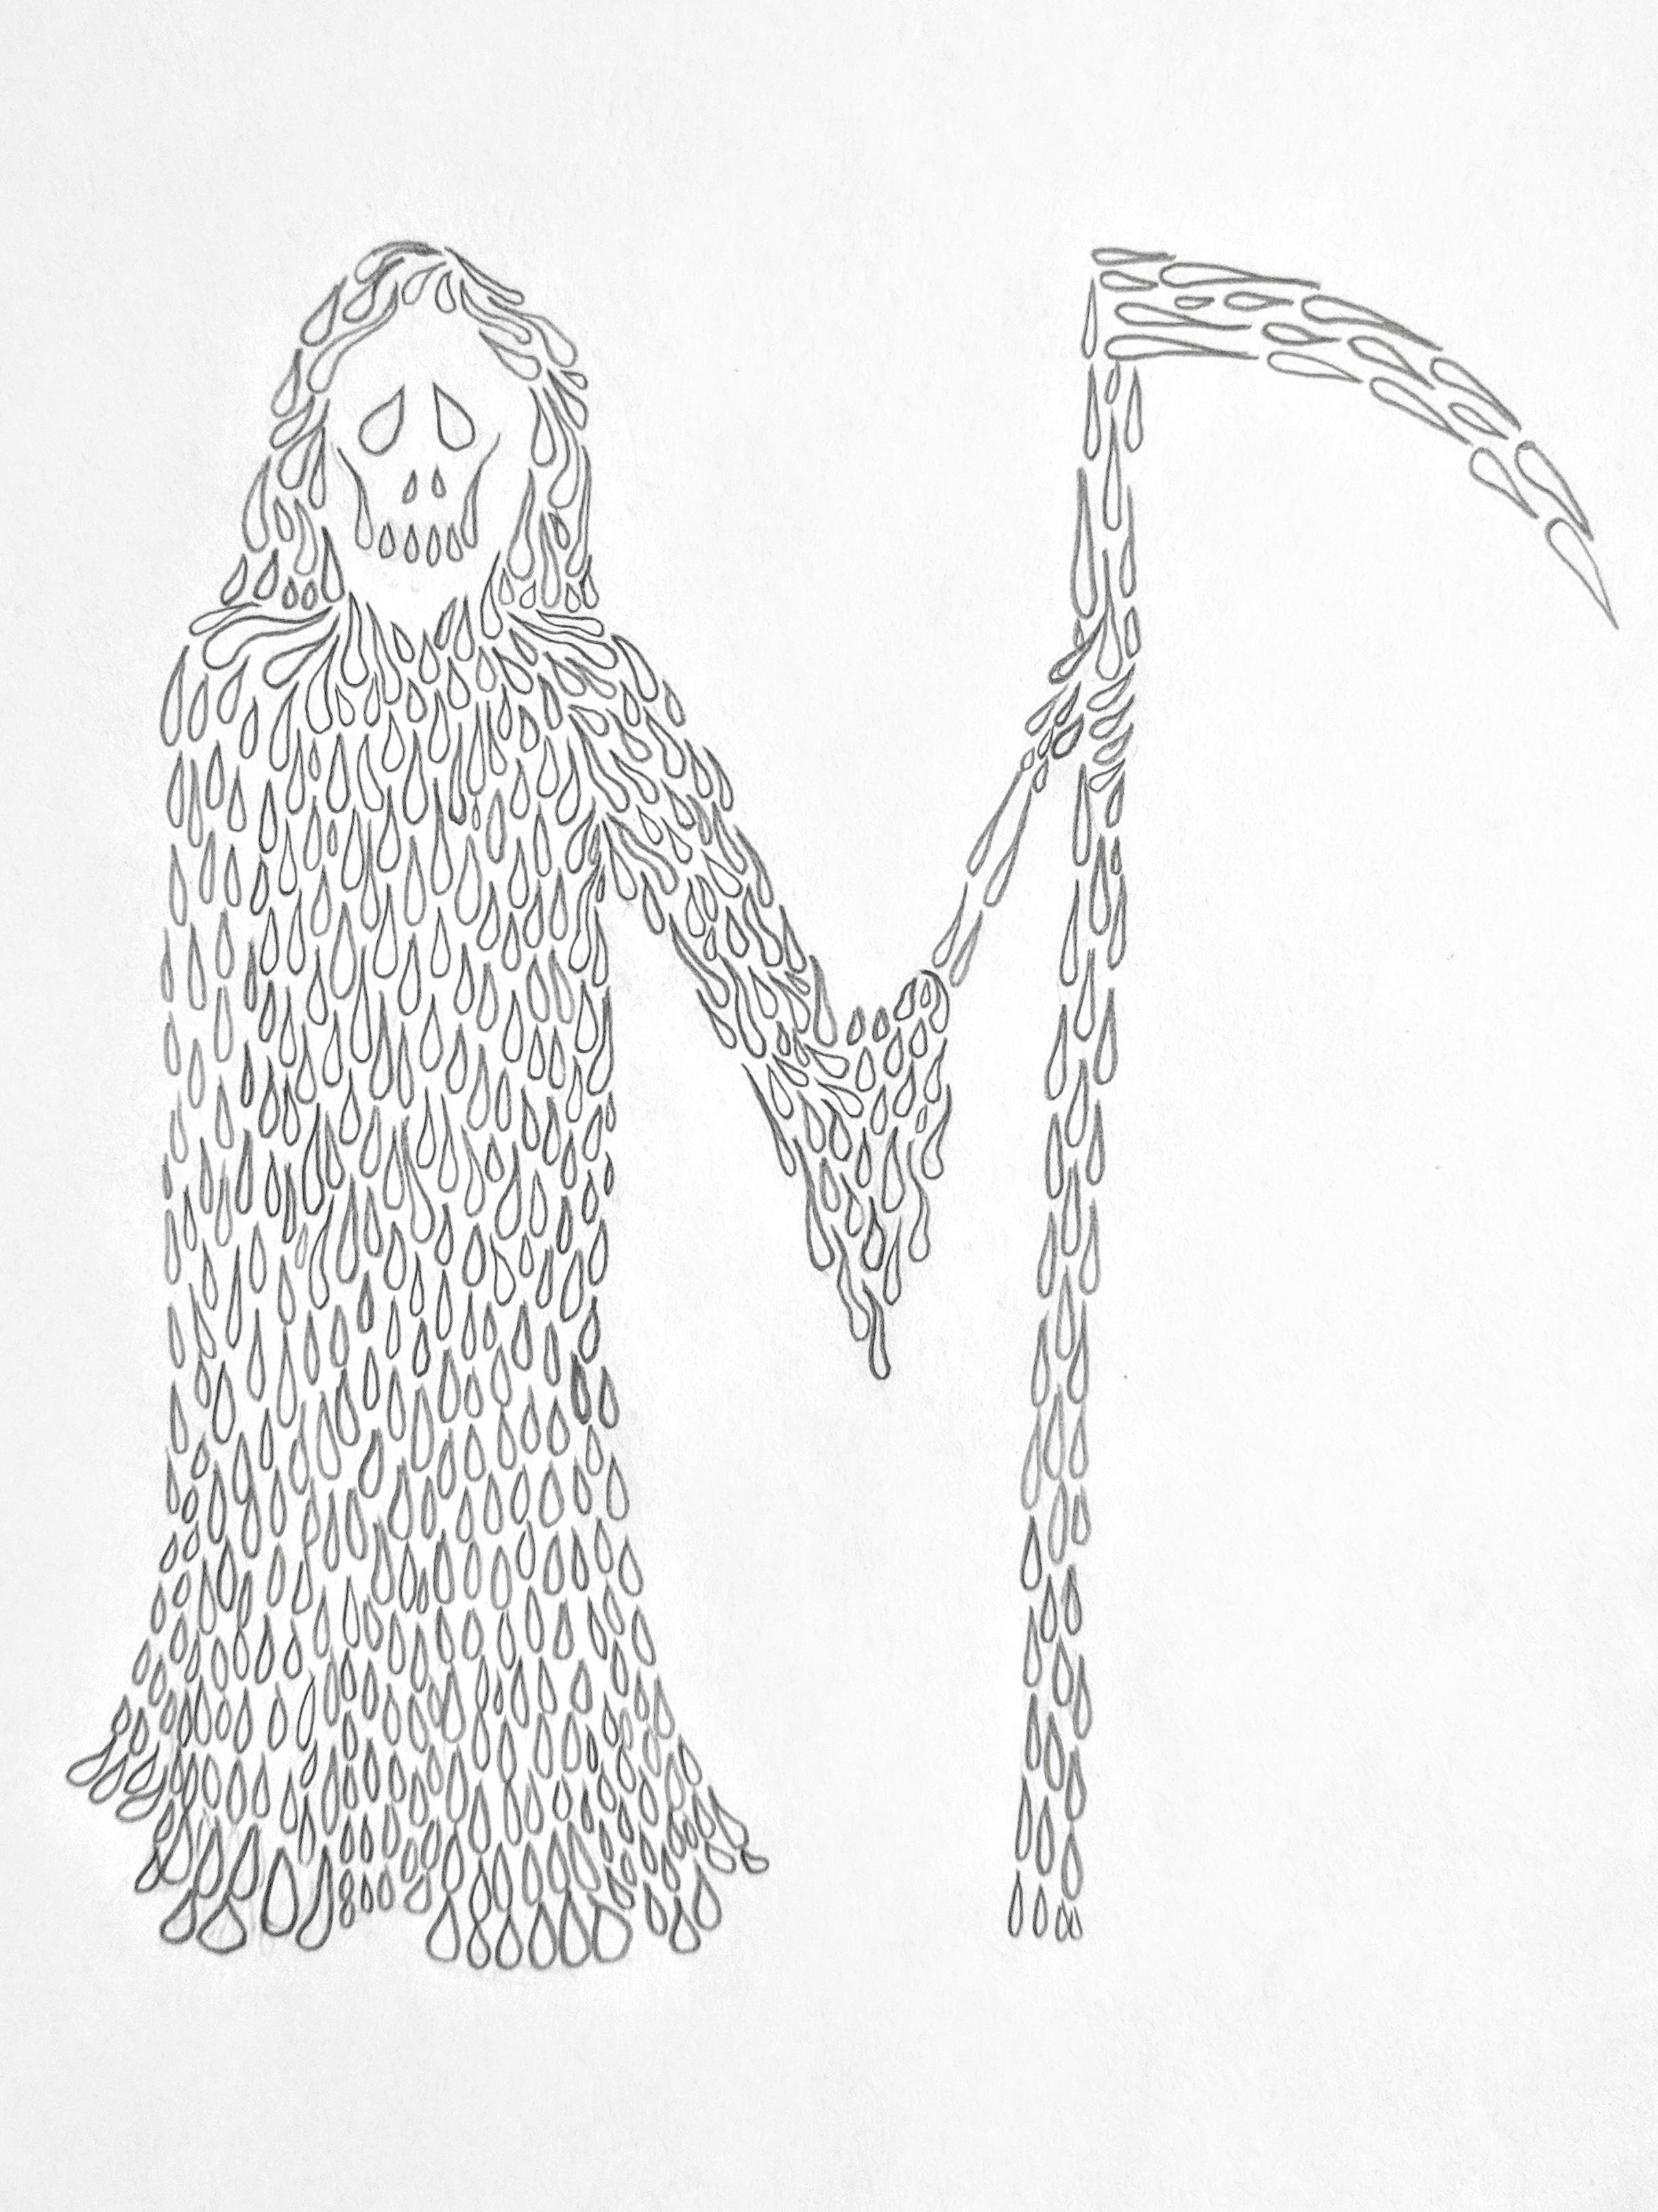 Grim Reaper made of tears